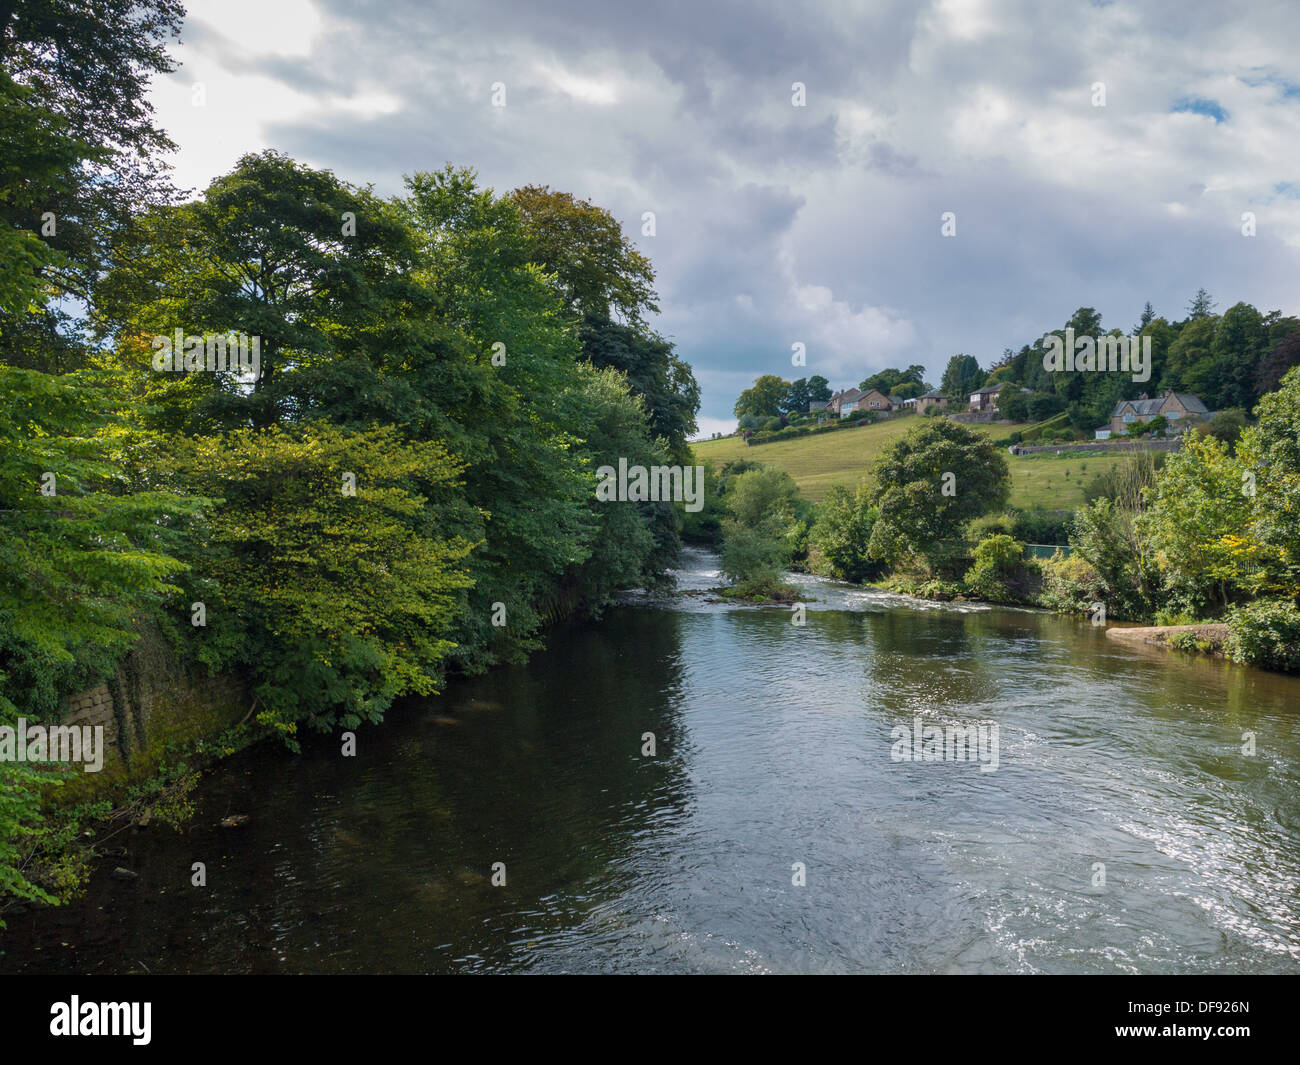 View of the River Derwent taken from Belper, Derbyshire, United Kingdom. Stock Photo